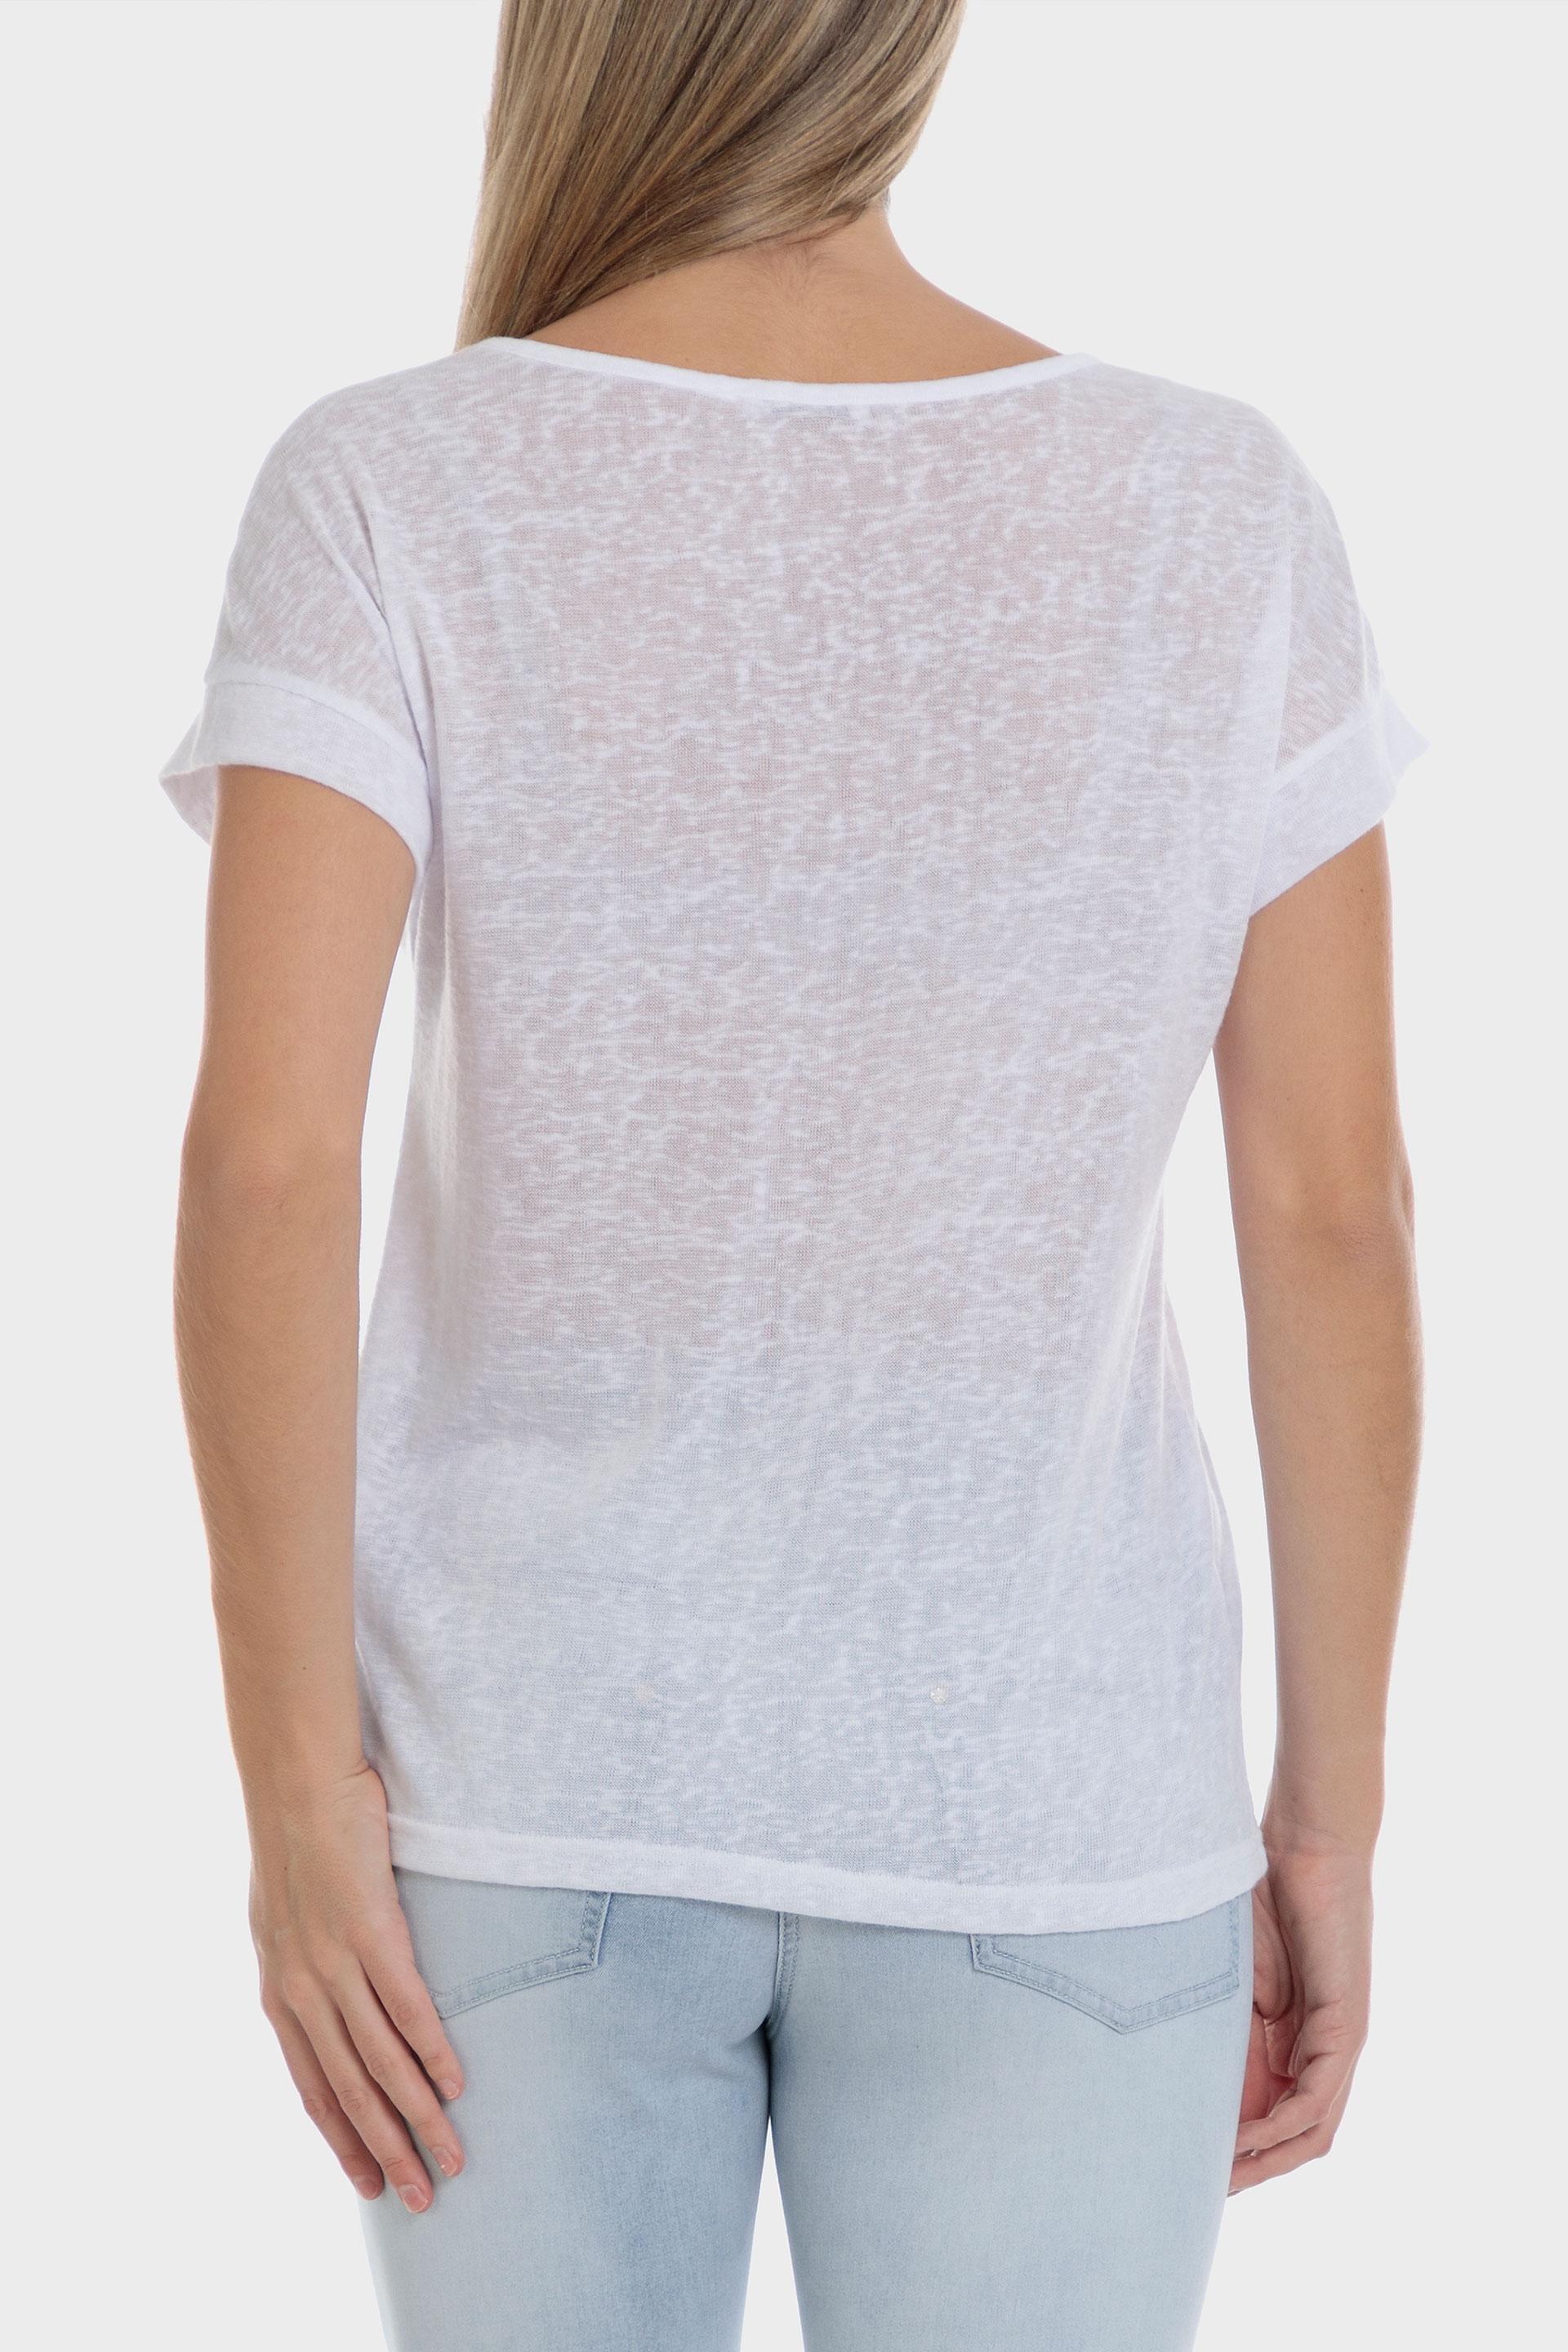 Punt Roma - White Printed T-Shirt With Gemstones